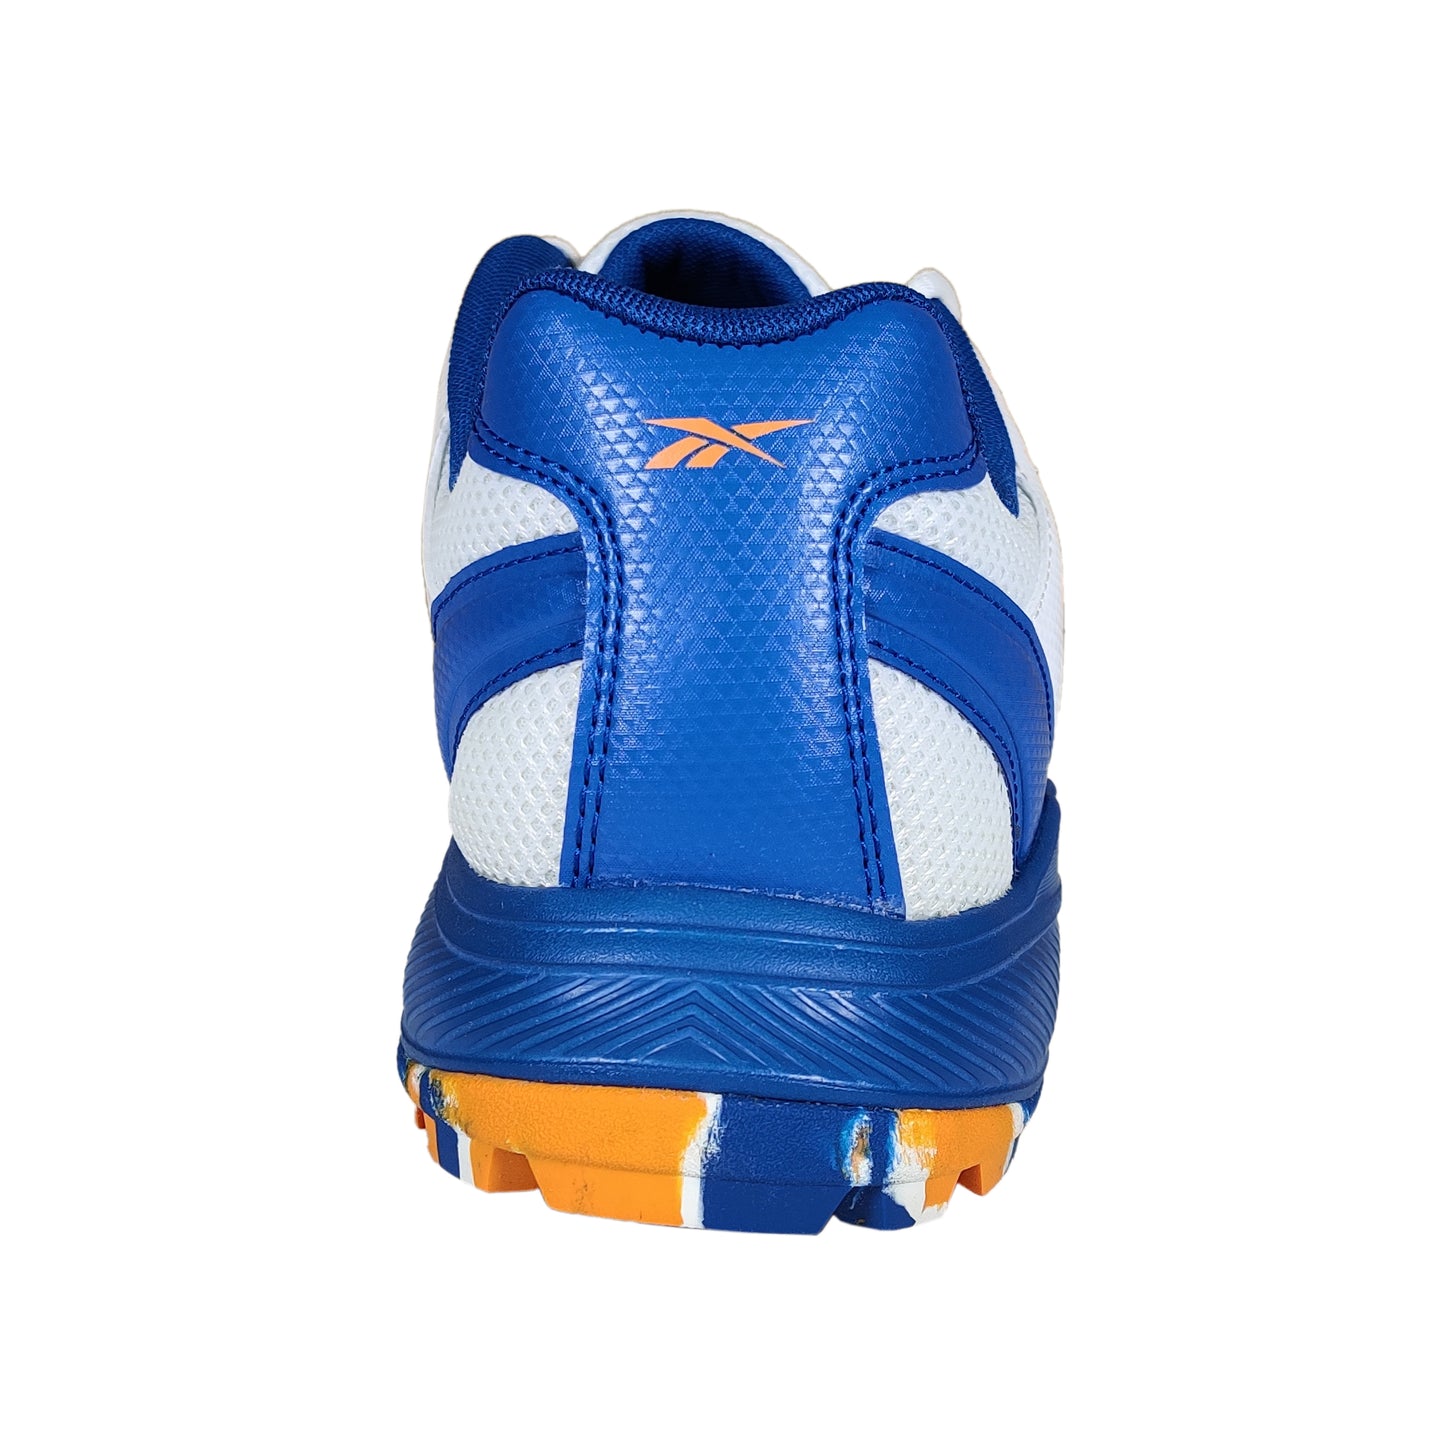 Reebok Re-volve Tech Cricket Shoe, White/Shocking Orange/Vector Blue - Best Price online Prokicksports.com